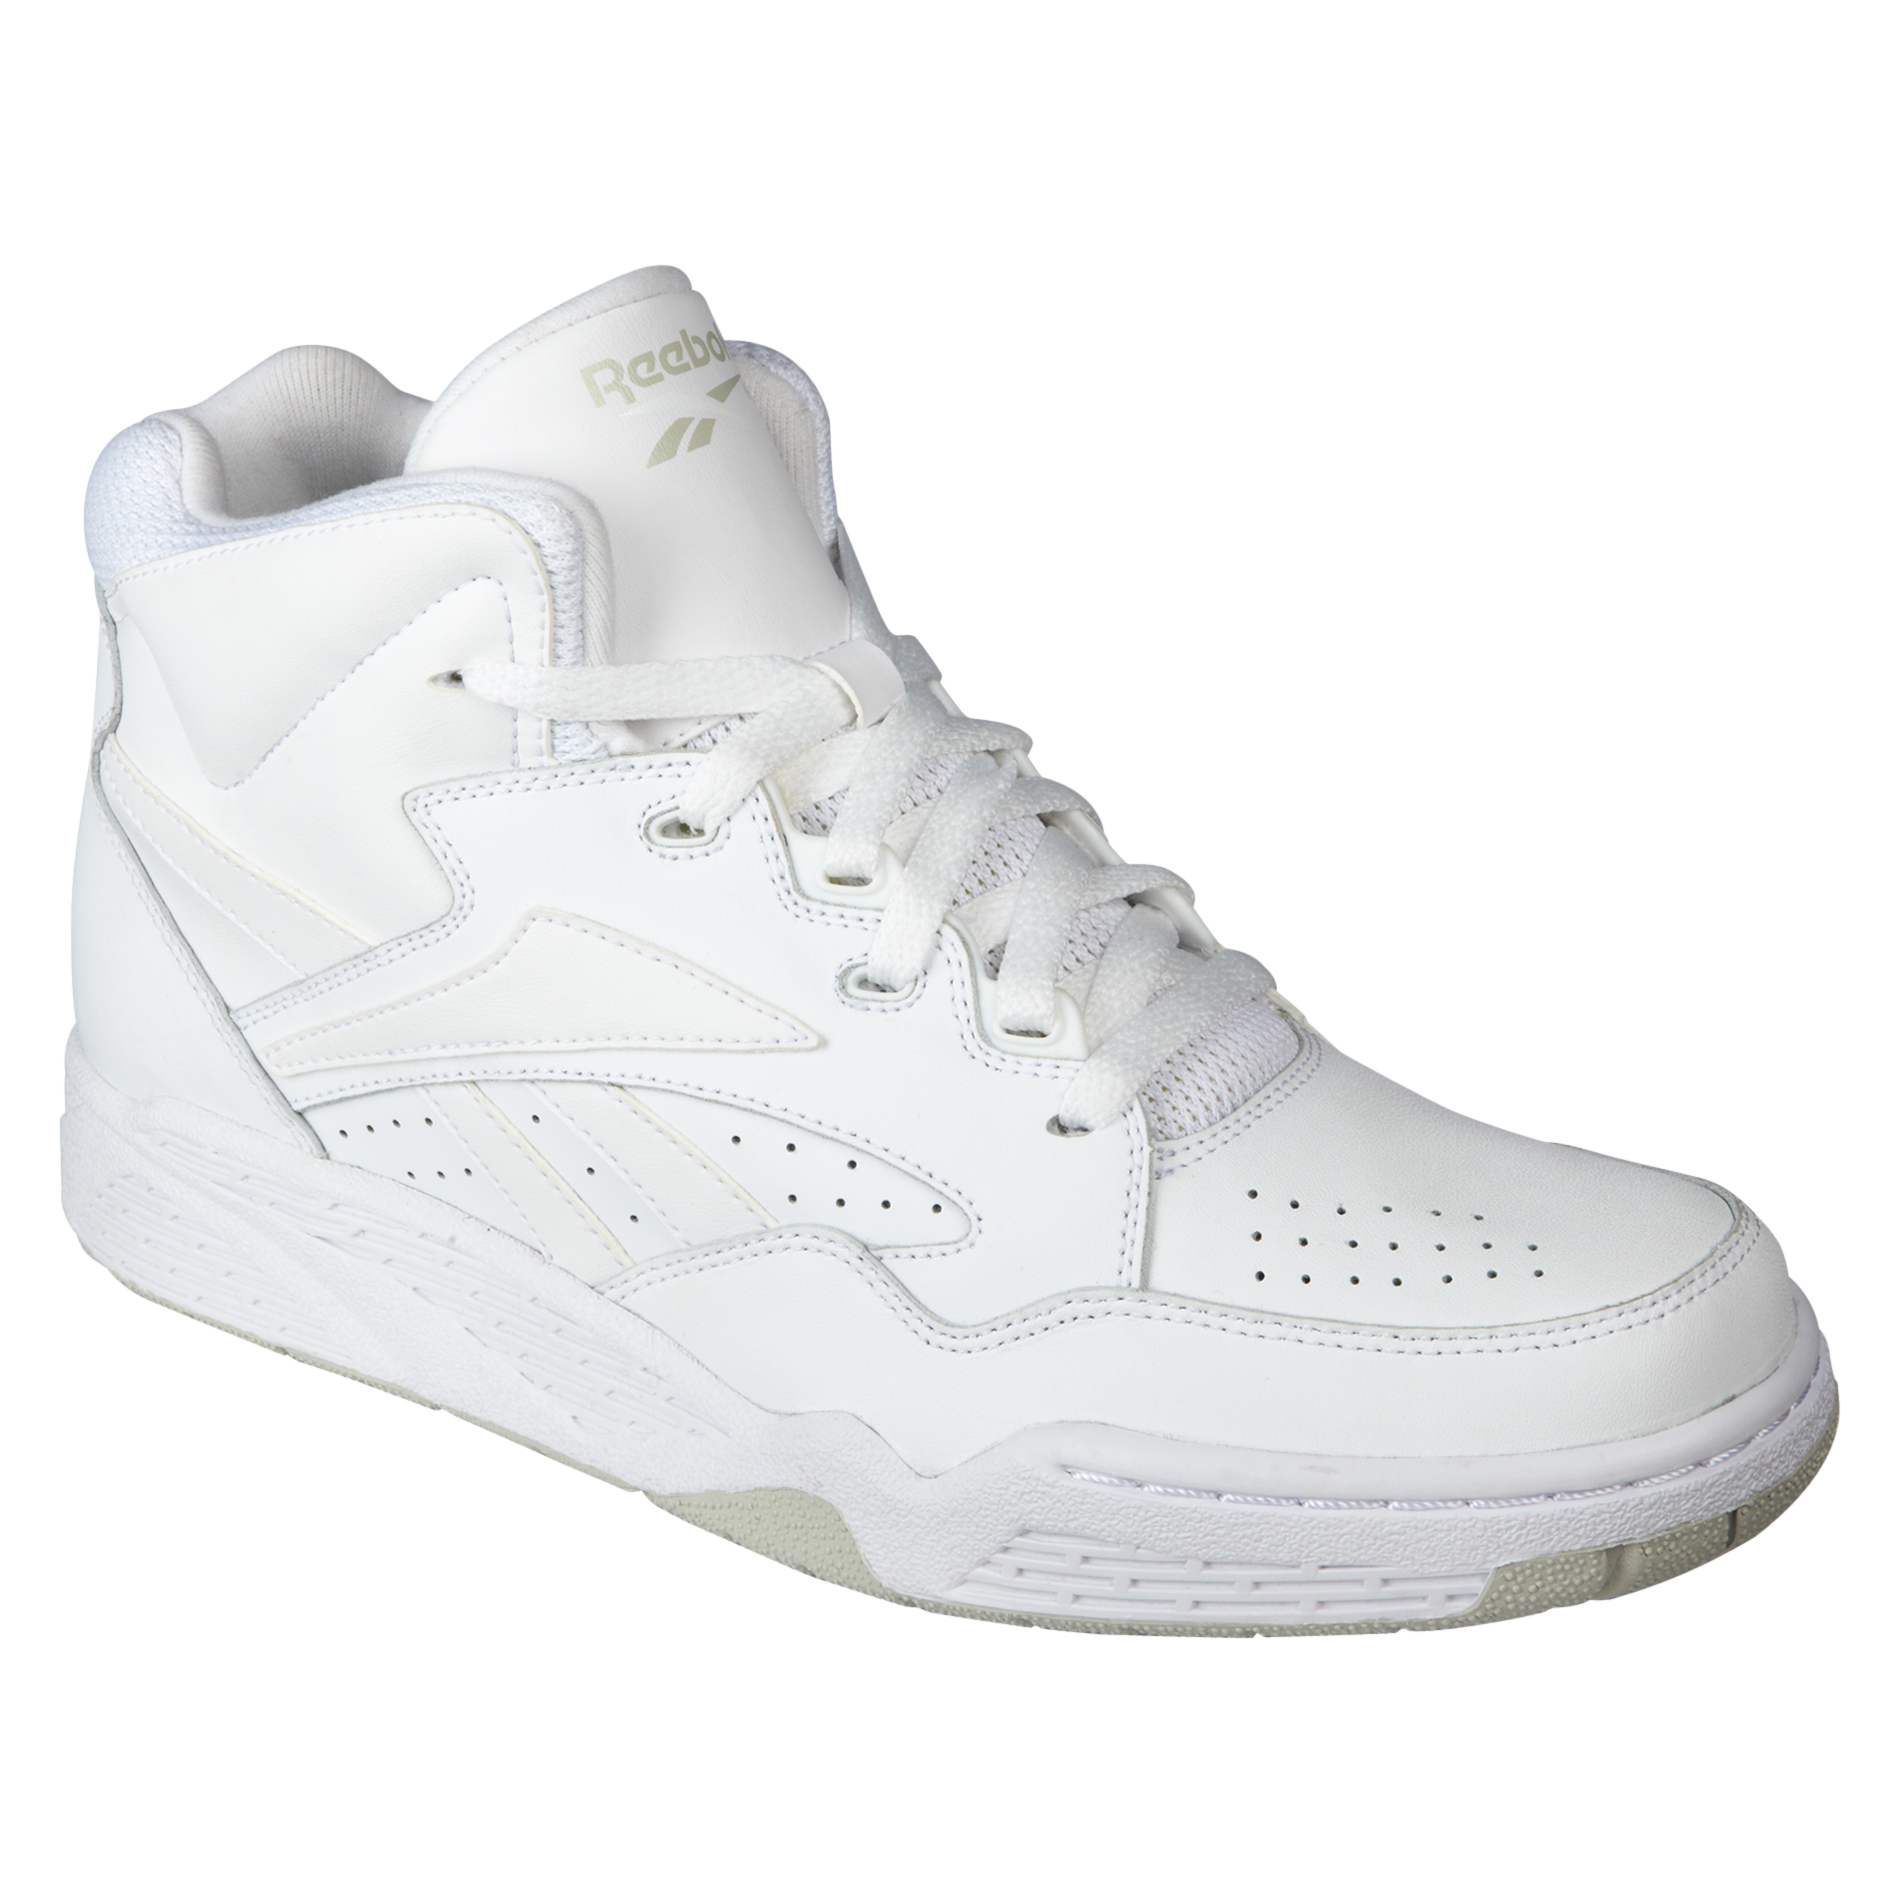 Reebok Men's BB4600 Basketball Athletic Shoe - White Wide Width